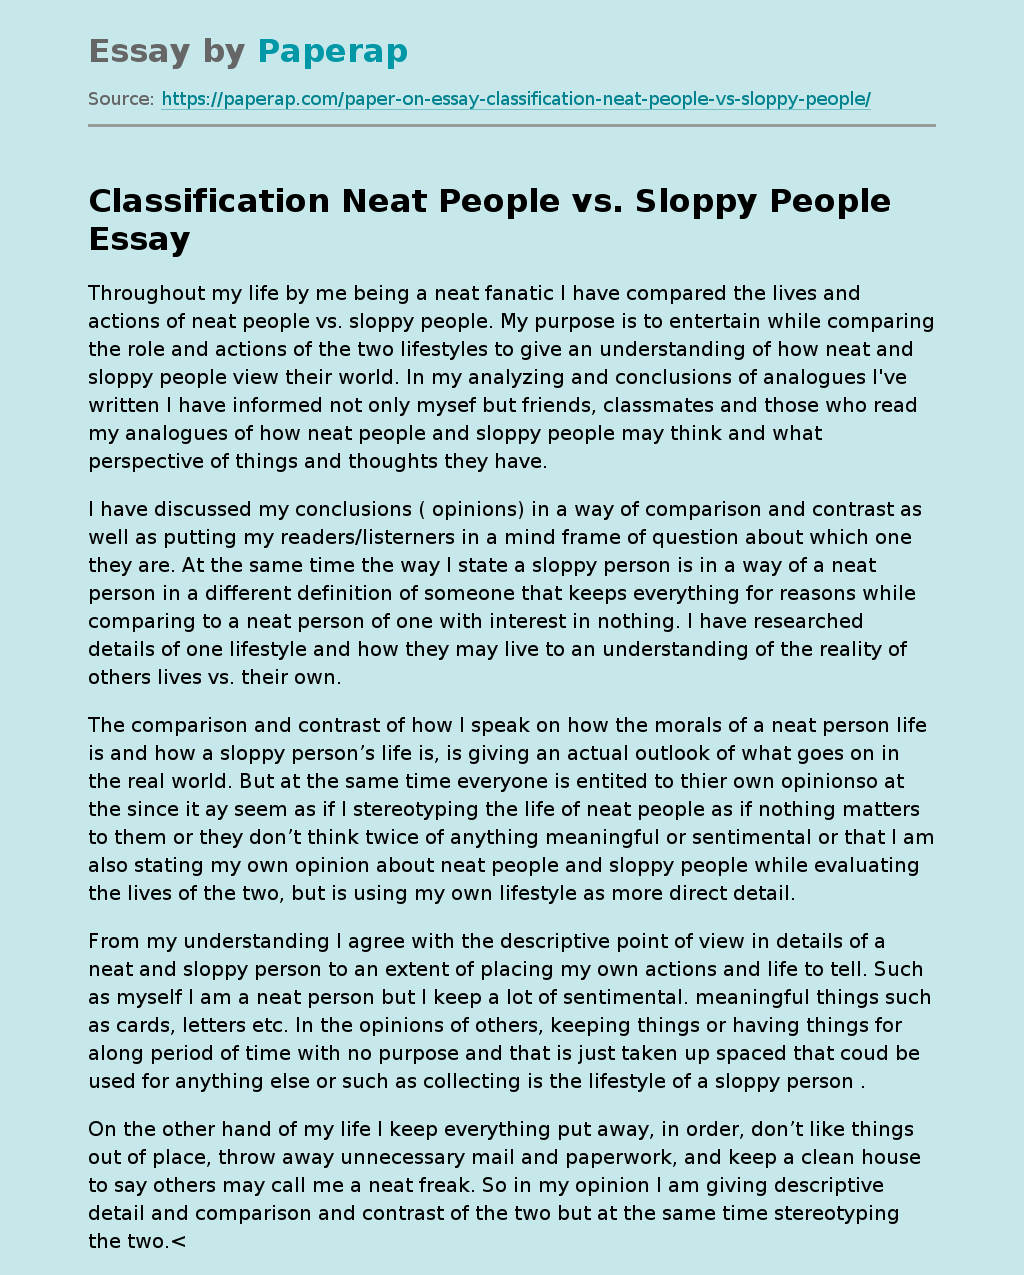 Classification Neat People vs Sloppy People